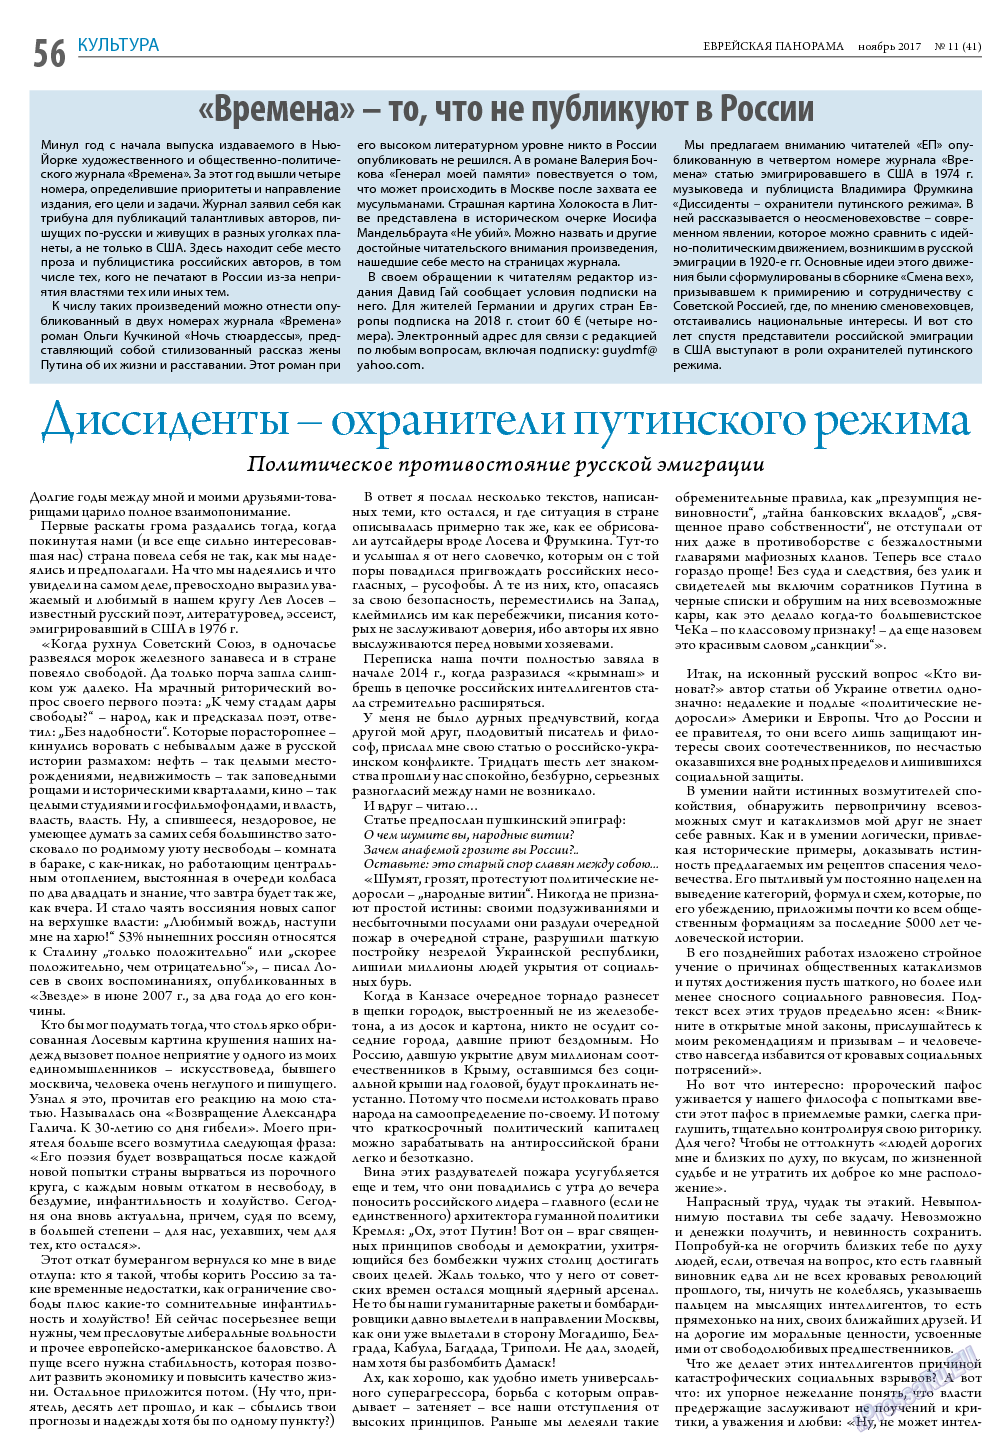 Еврейская панорама, газета. 2017 №11 стр.56